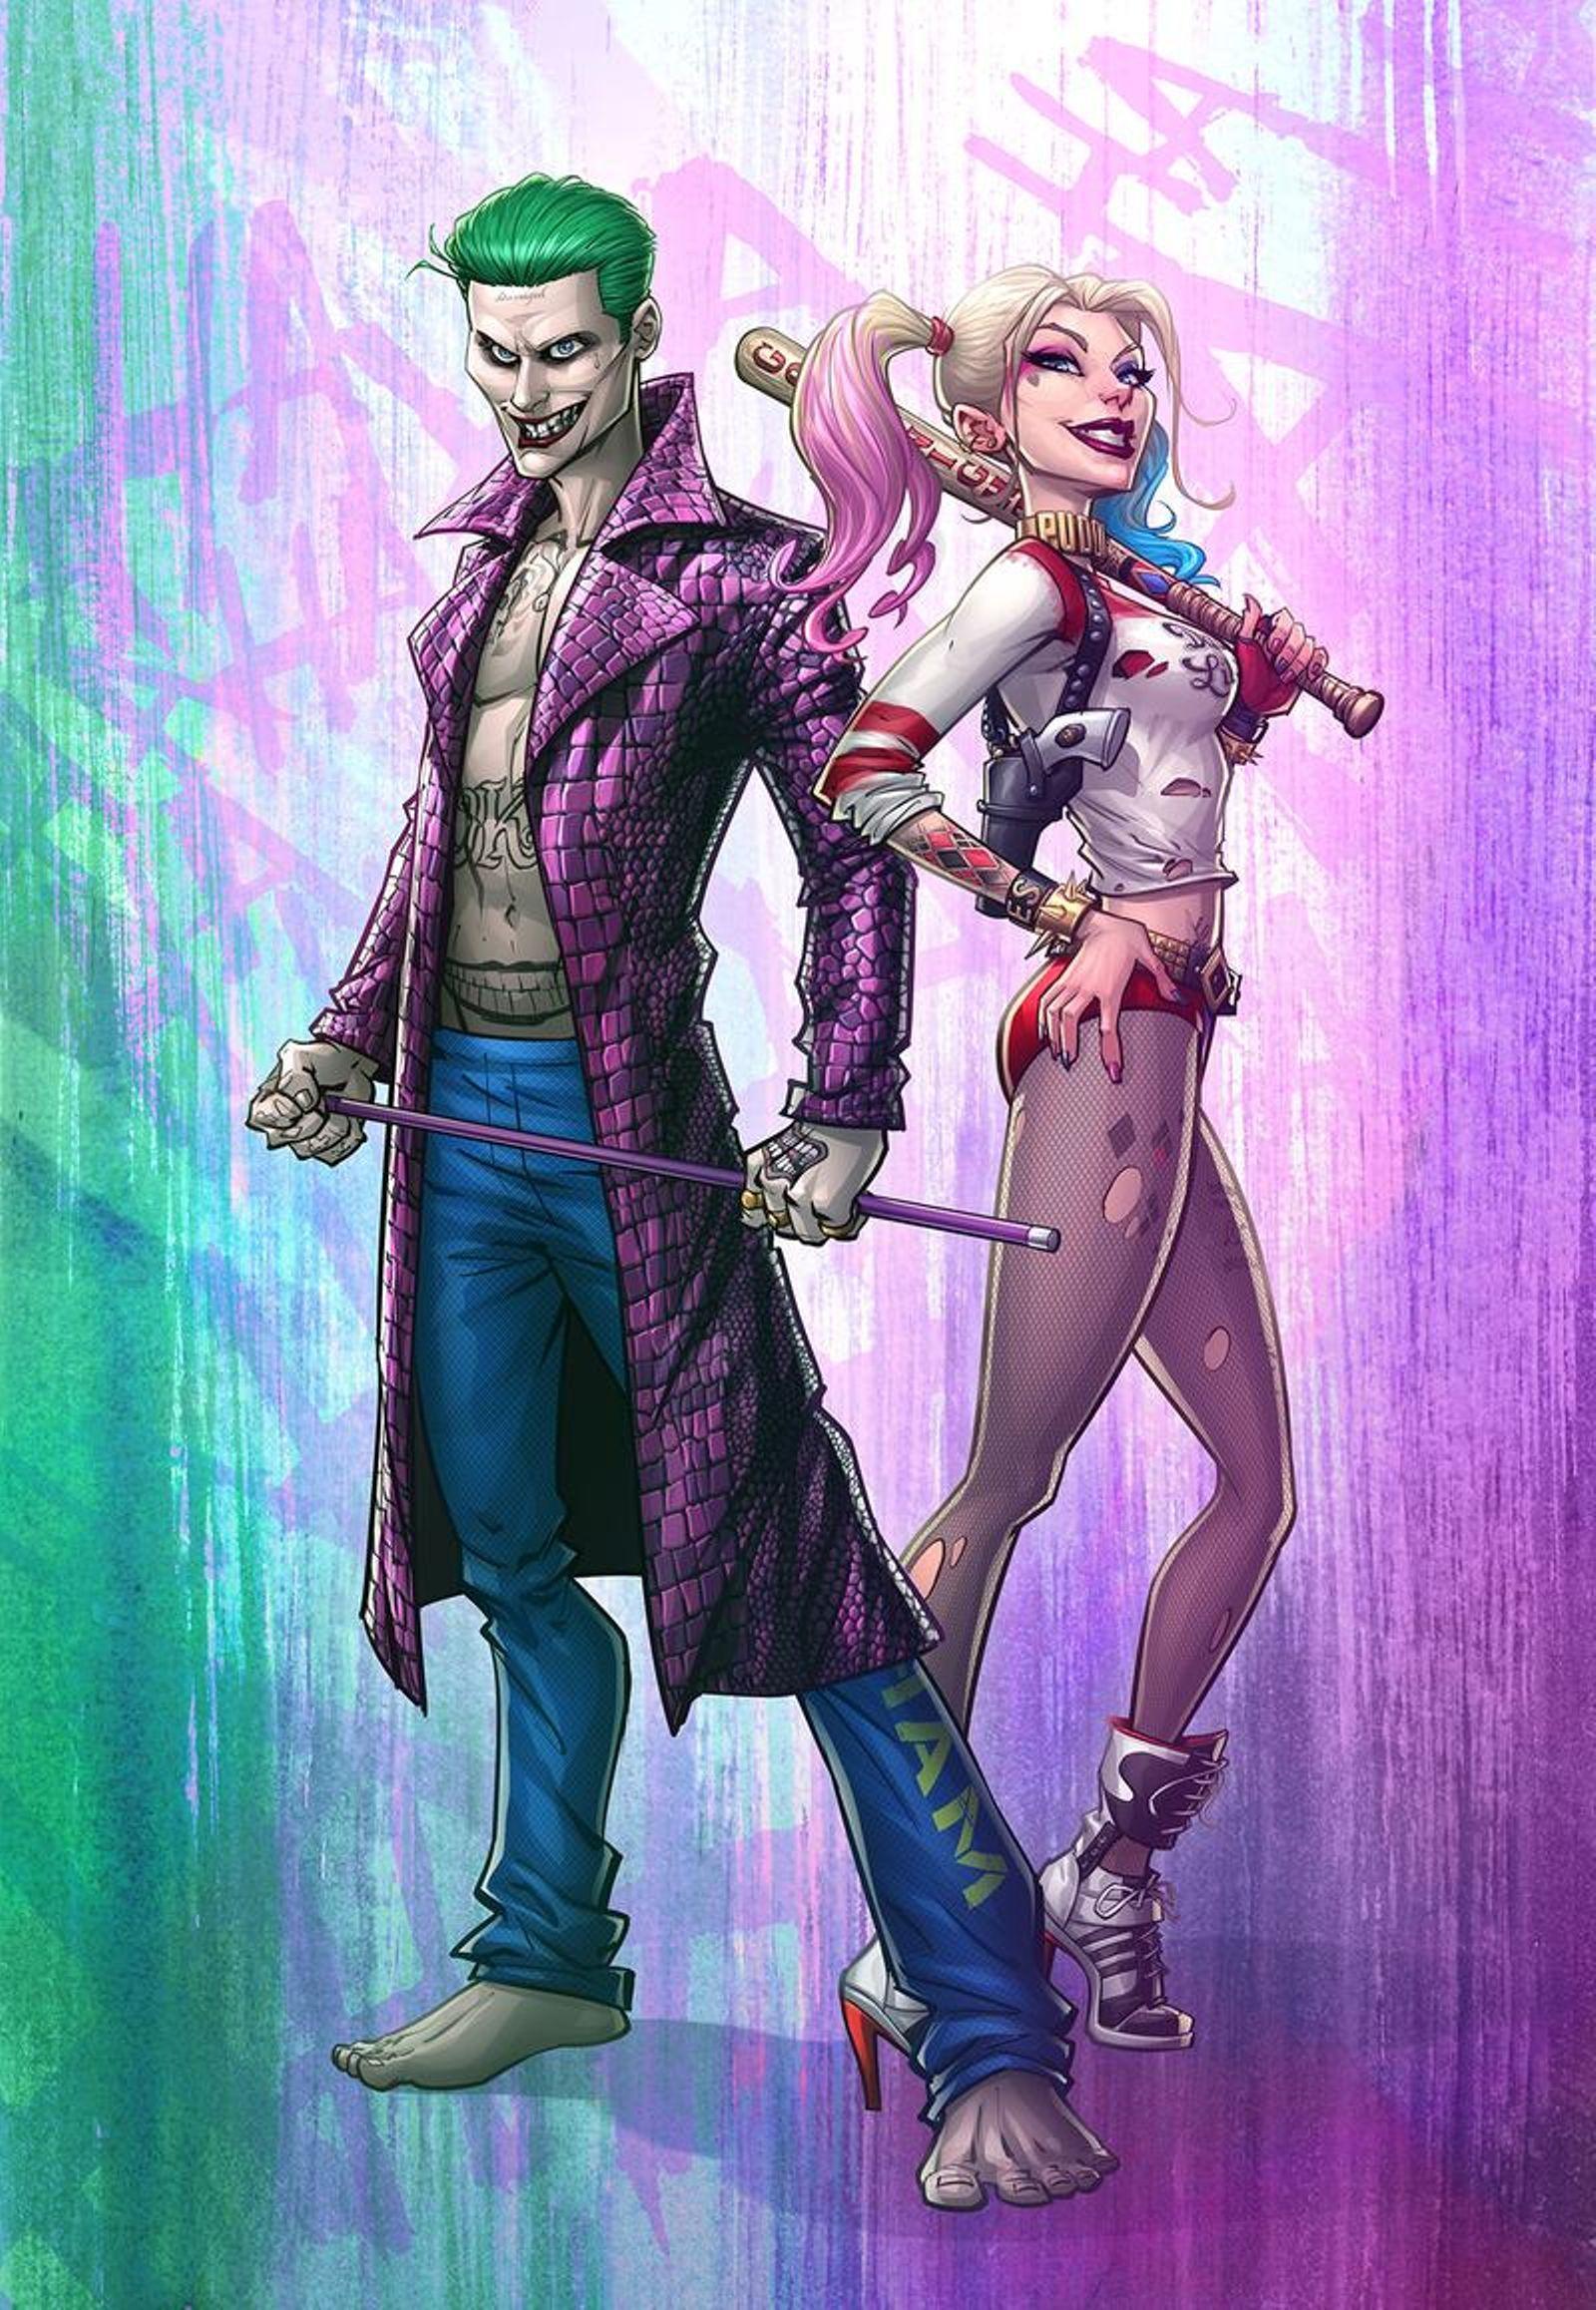 Fun Art Joker Harley Quinn Suicide Squad wallpaper 2018 in Movies